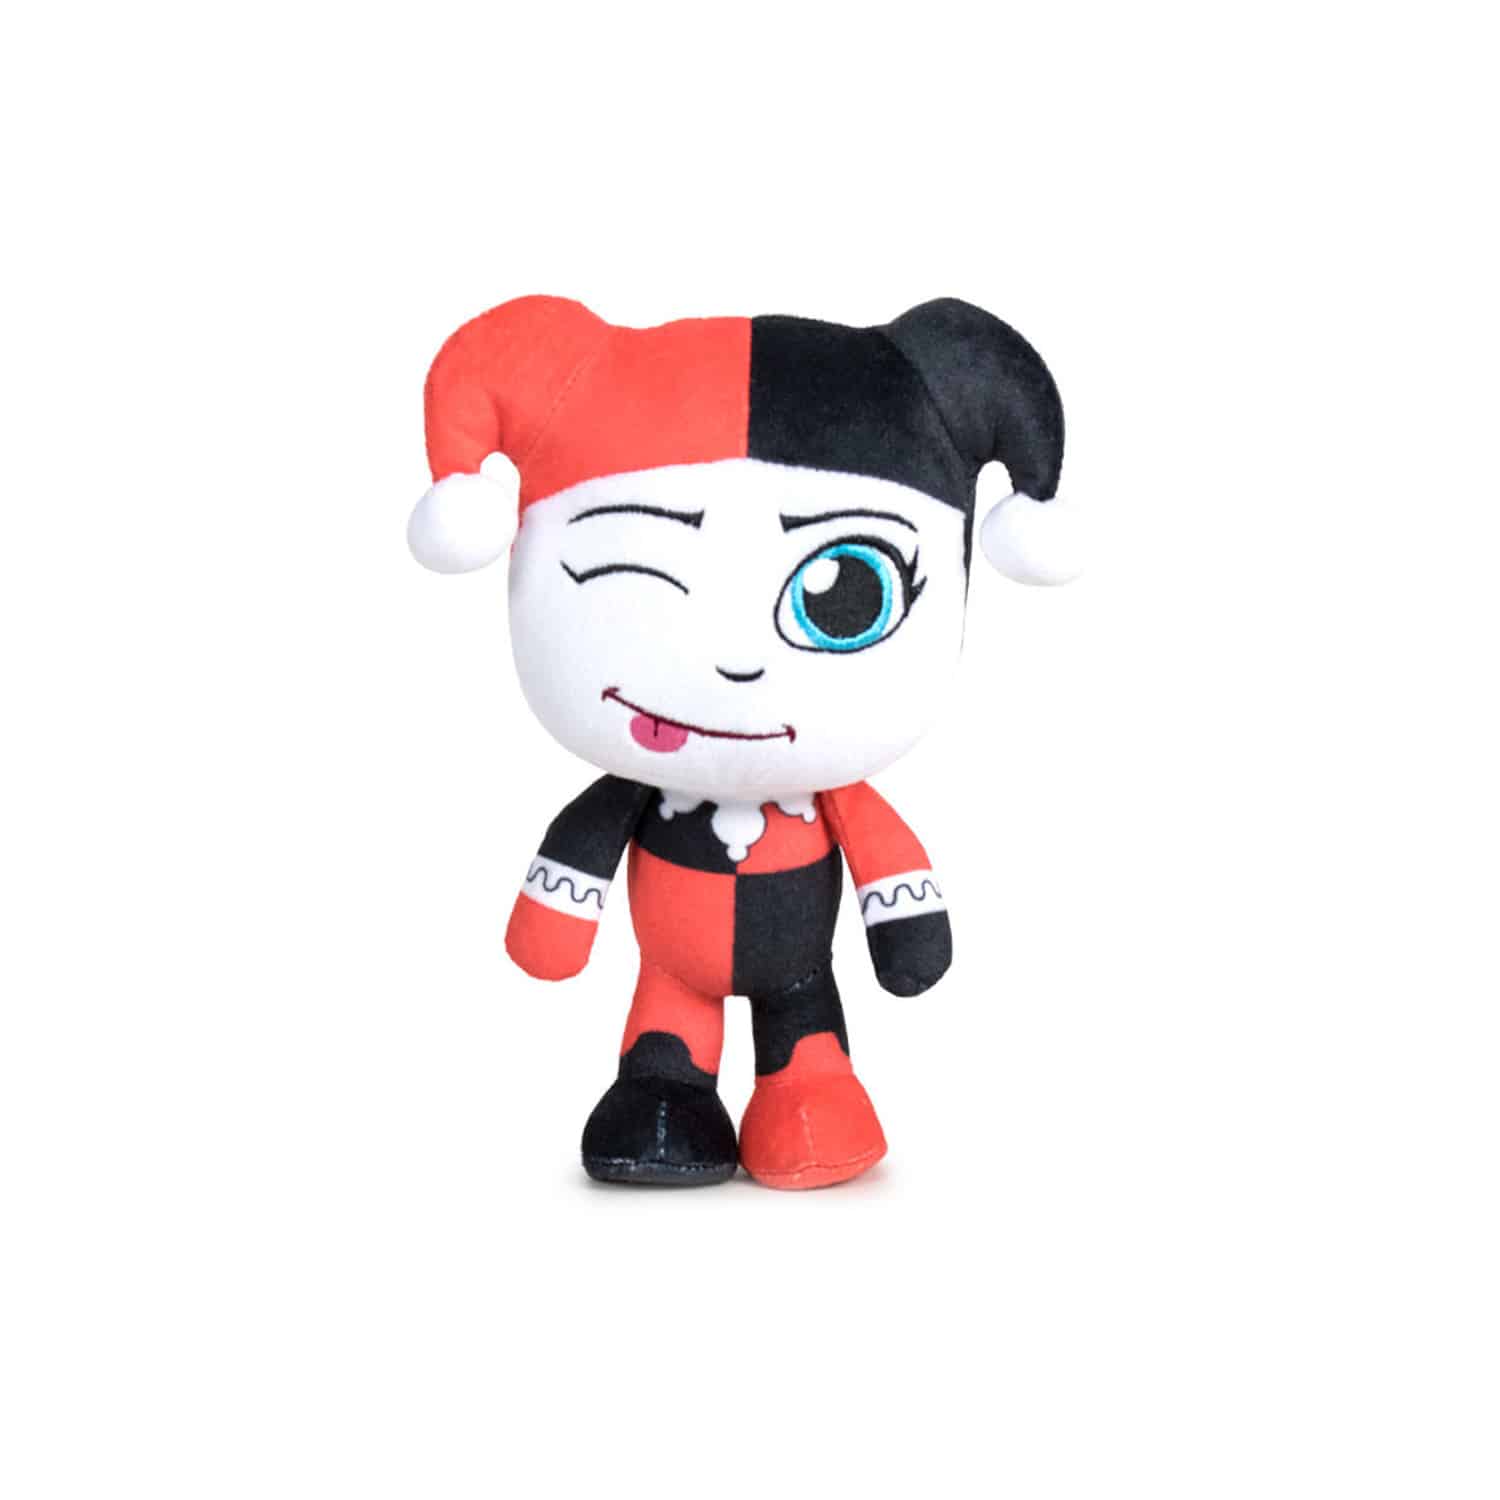 Harley Quinn Plush Toy